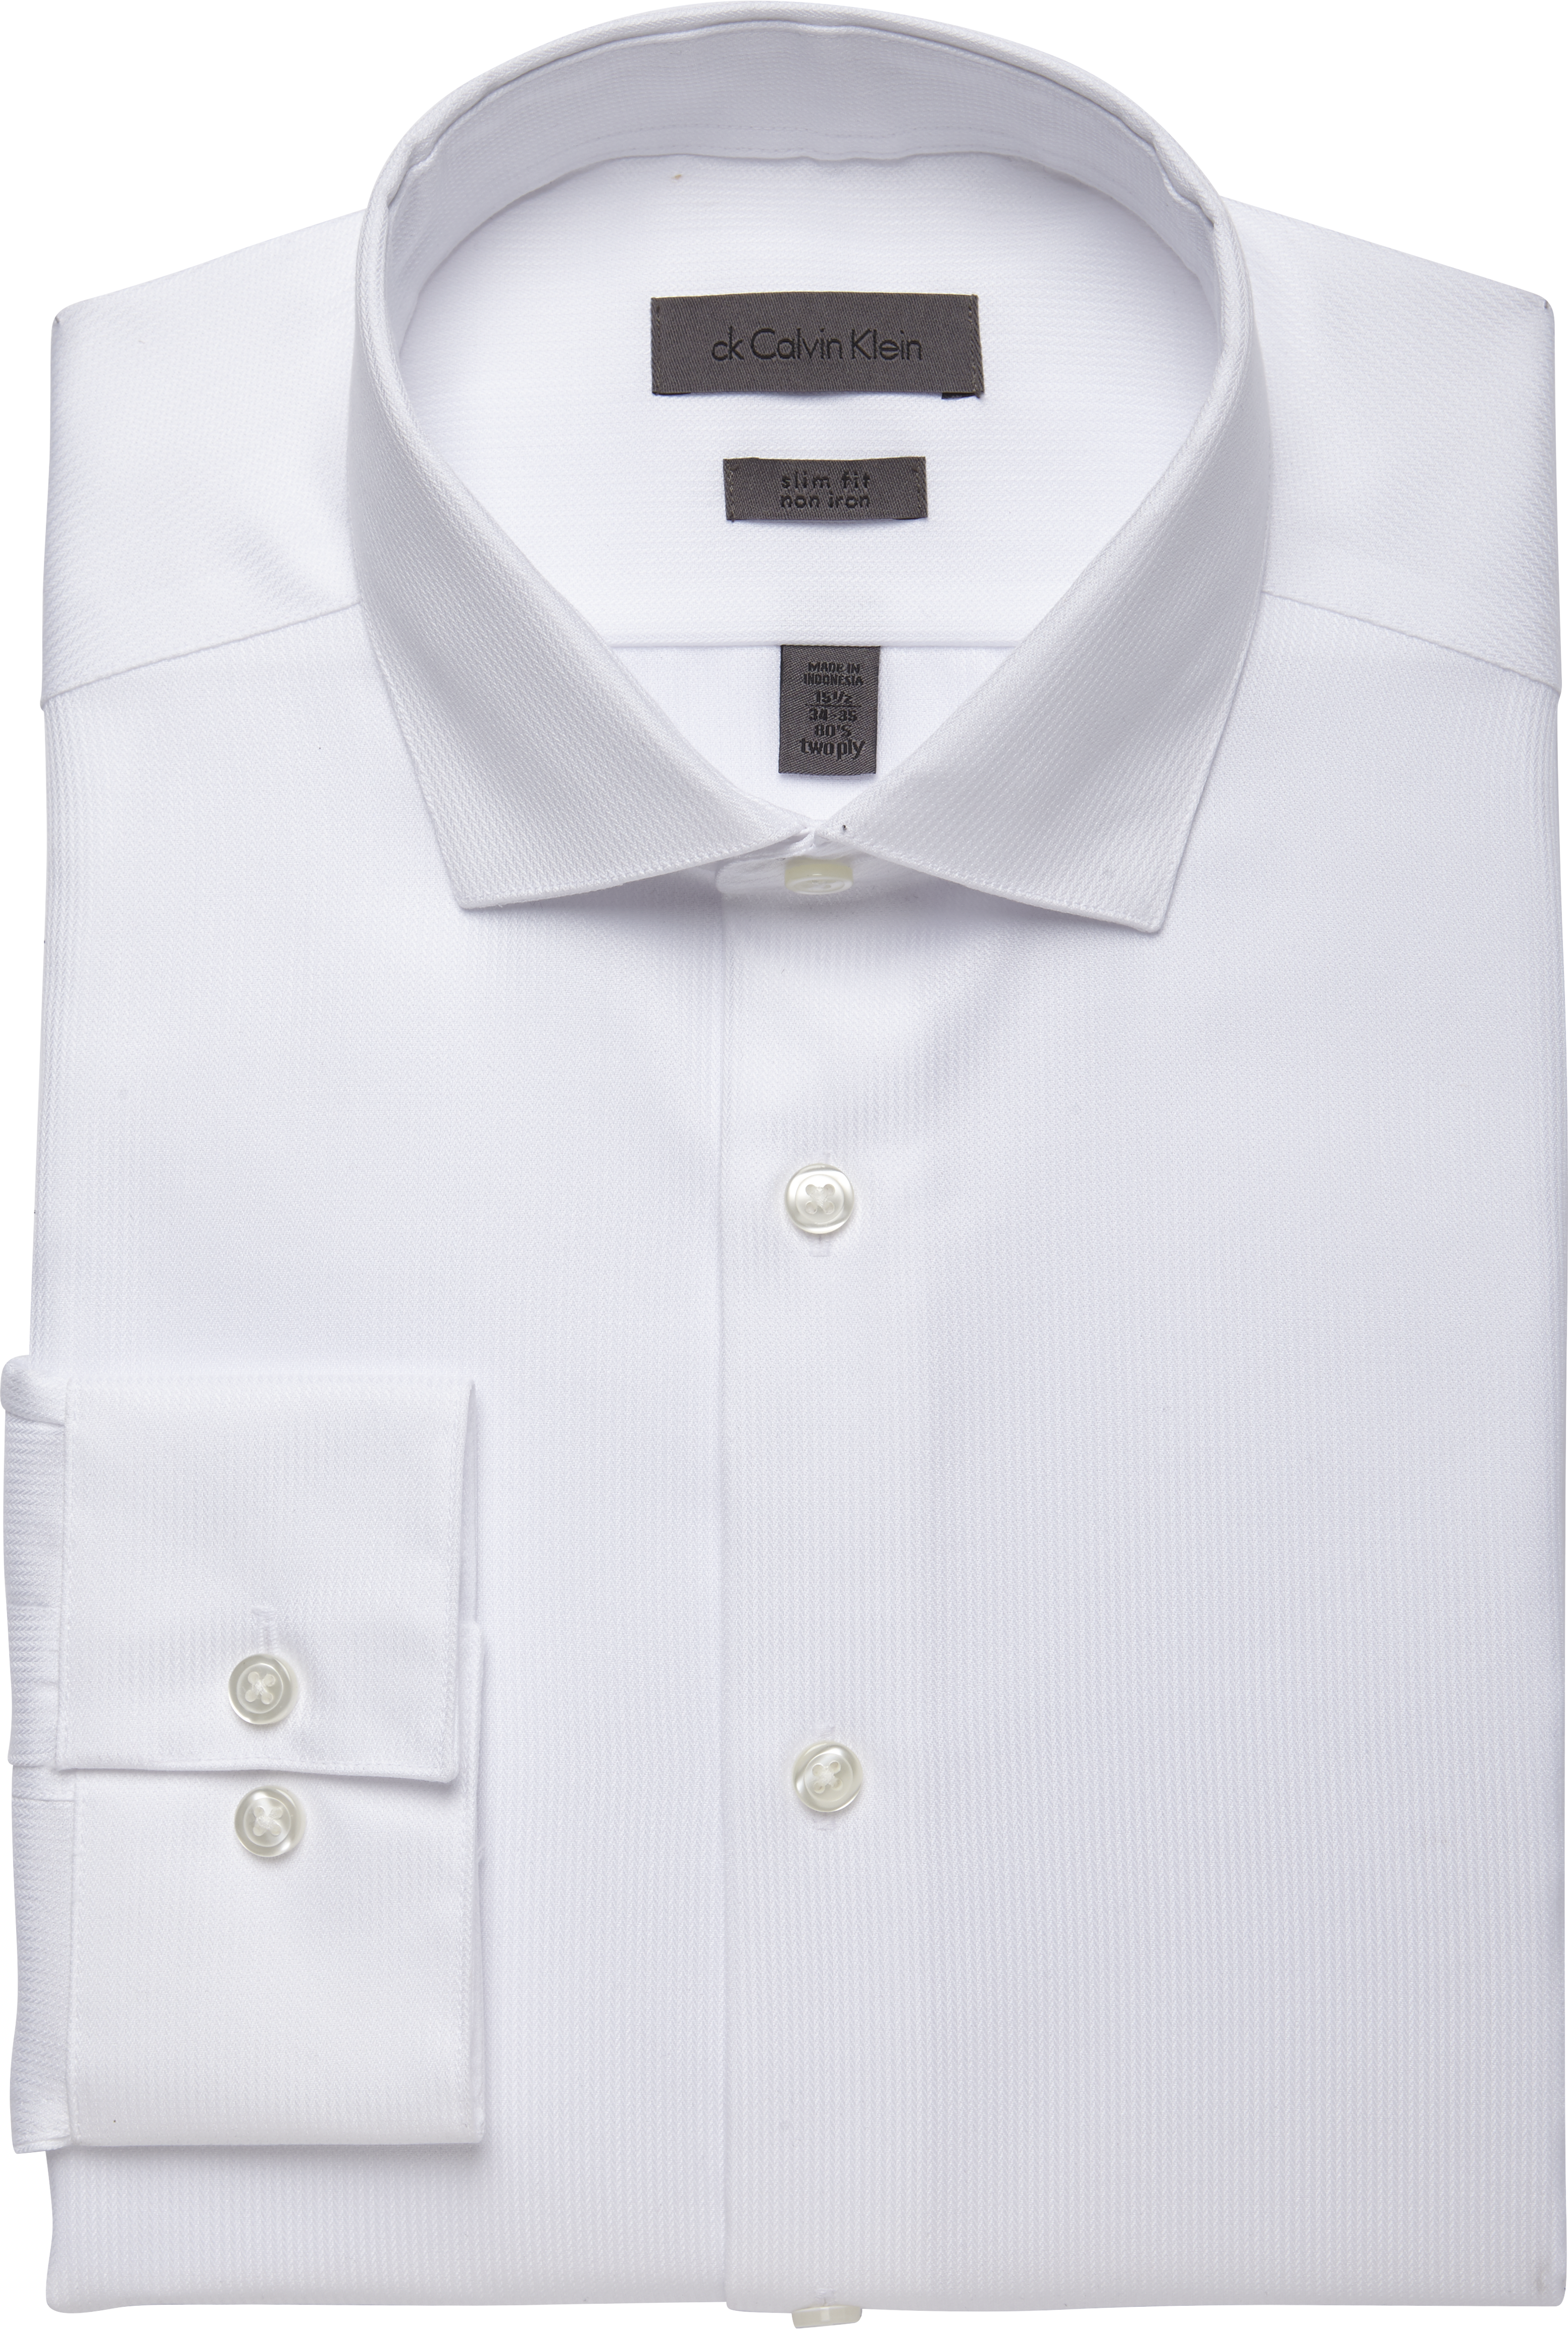 overloop Posters Geleend Calvin Klein White Slim Fit Dress Shirt - Men's Sale | Men's Wearhouse